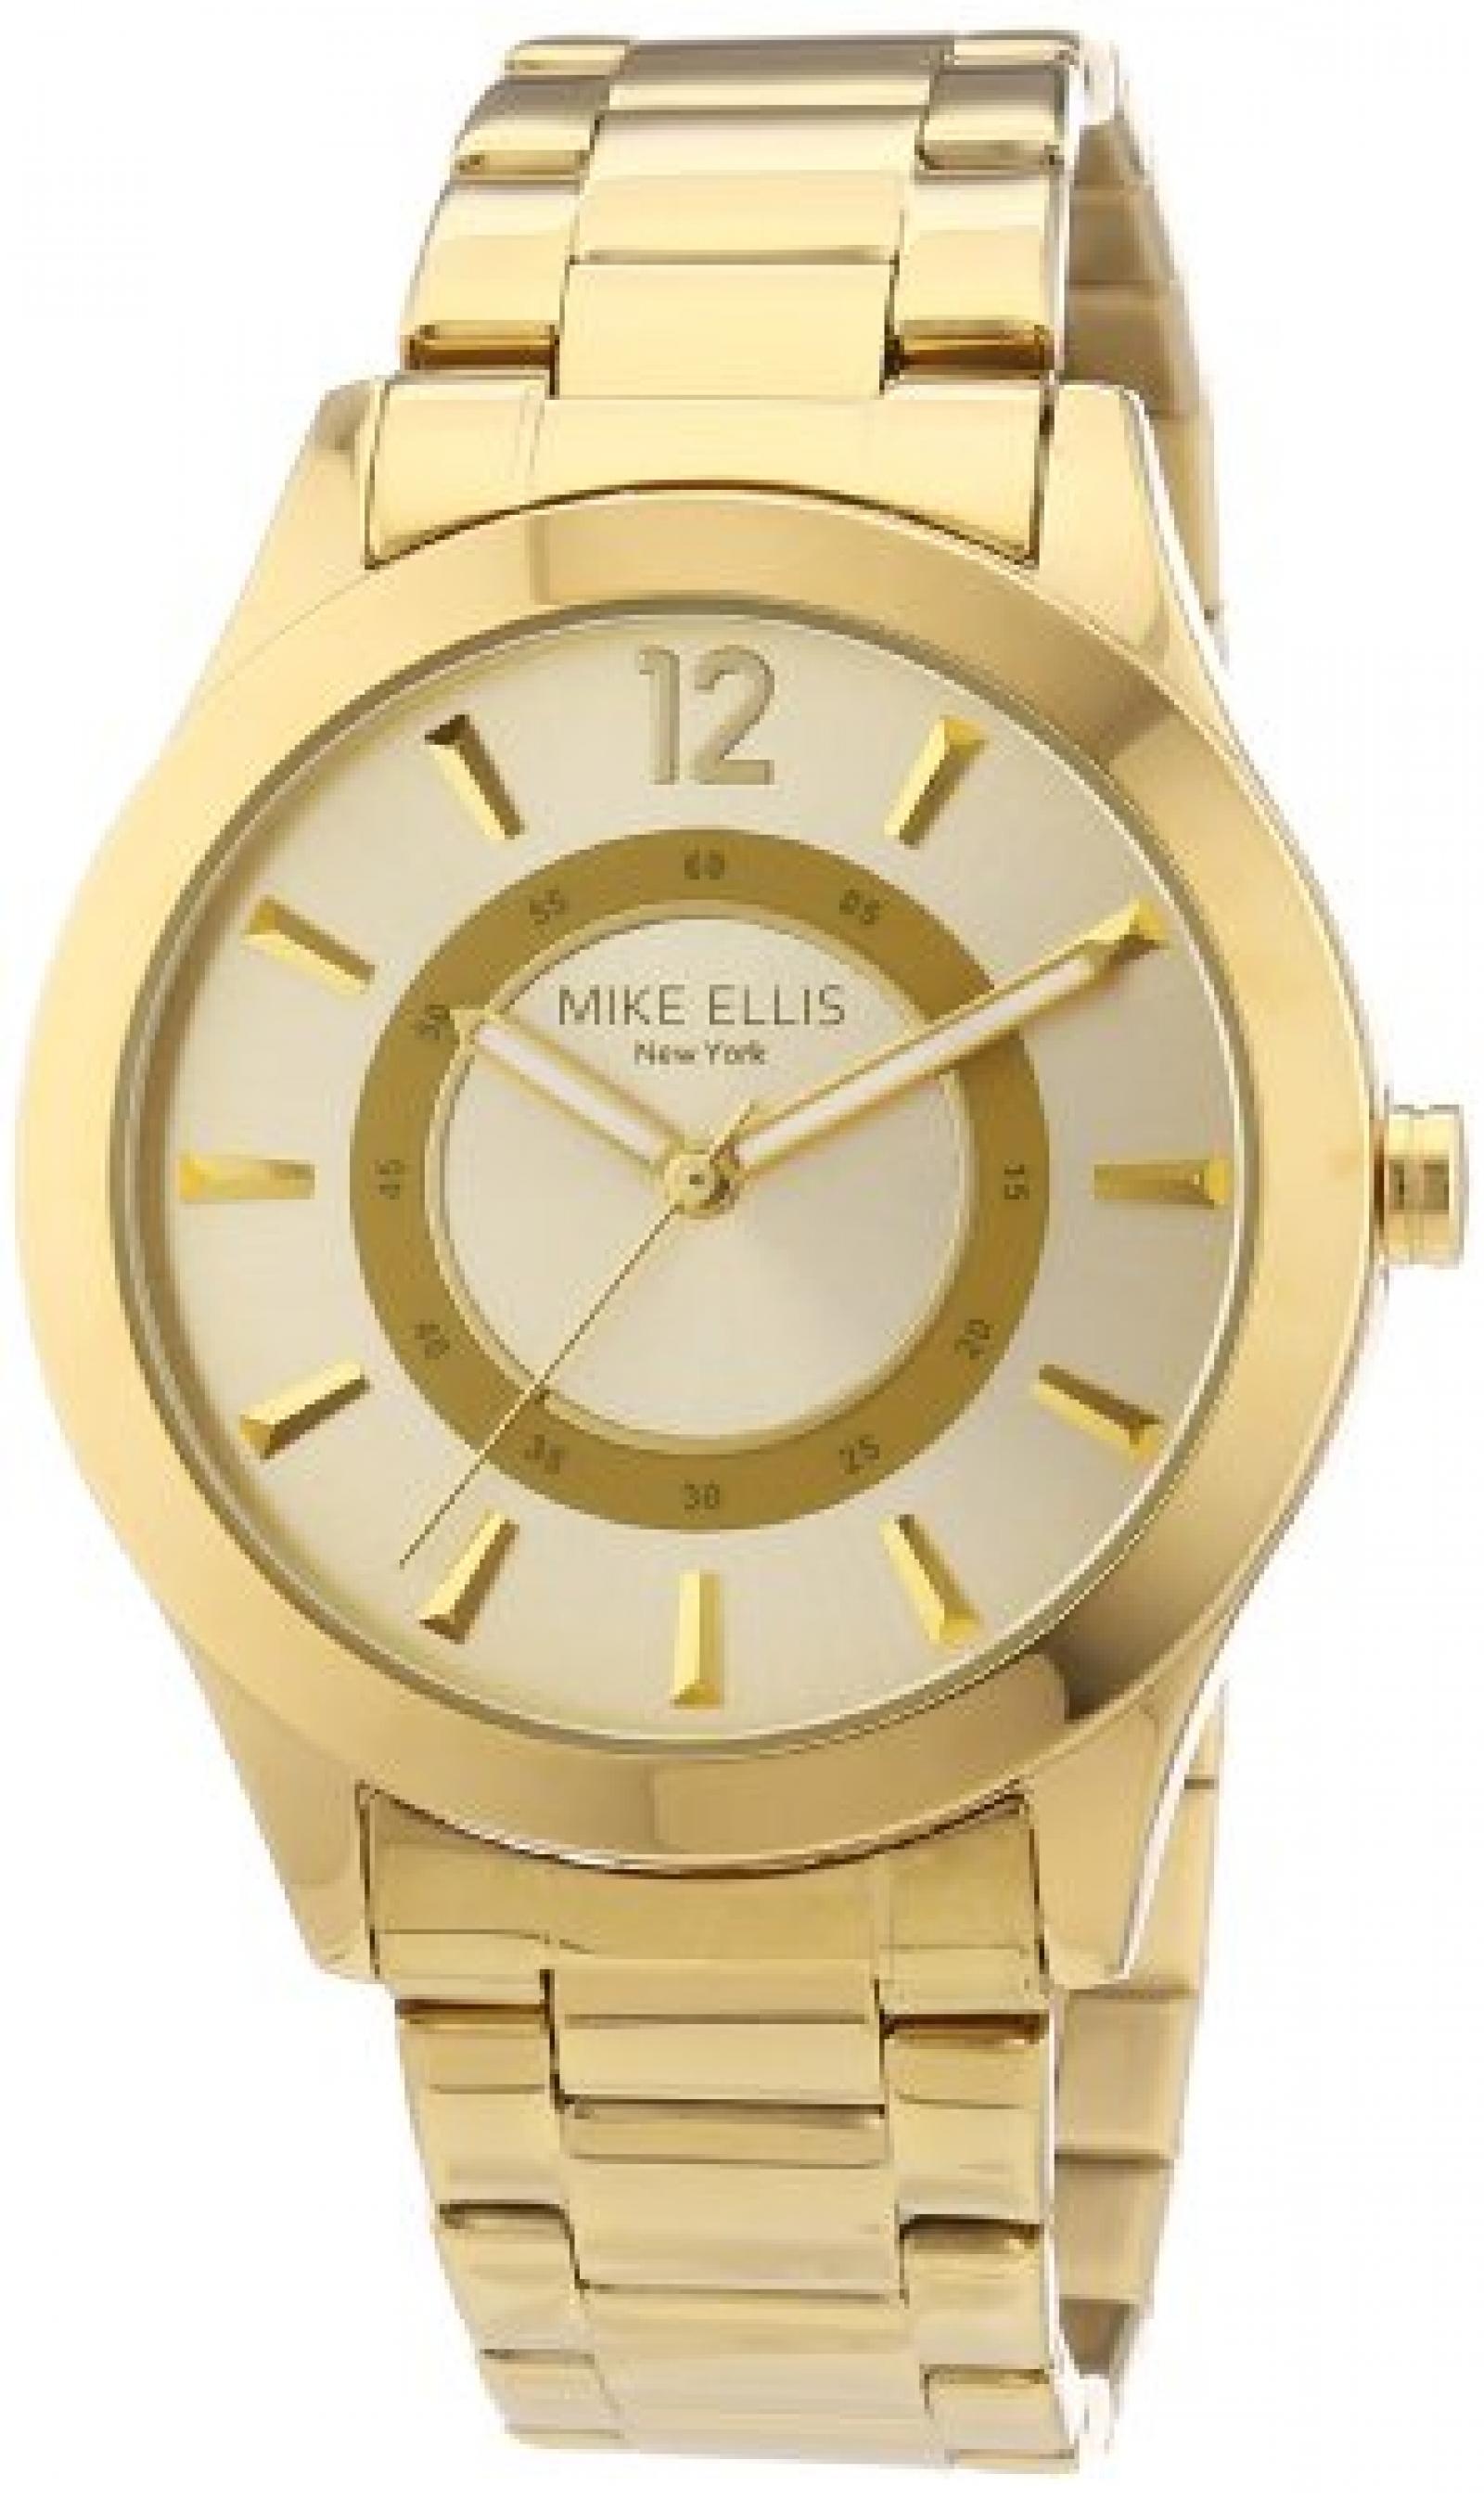 Mike Ellis New York Damen-Armbanduhr Analog Quarz Edelstahl beschichtet M2756AGM 